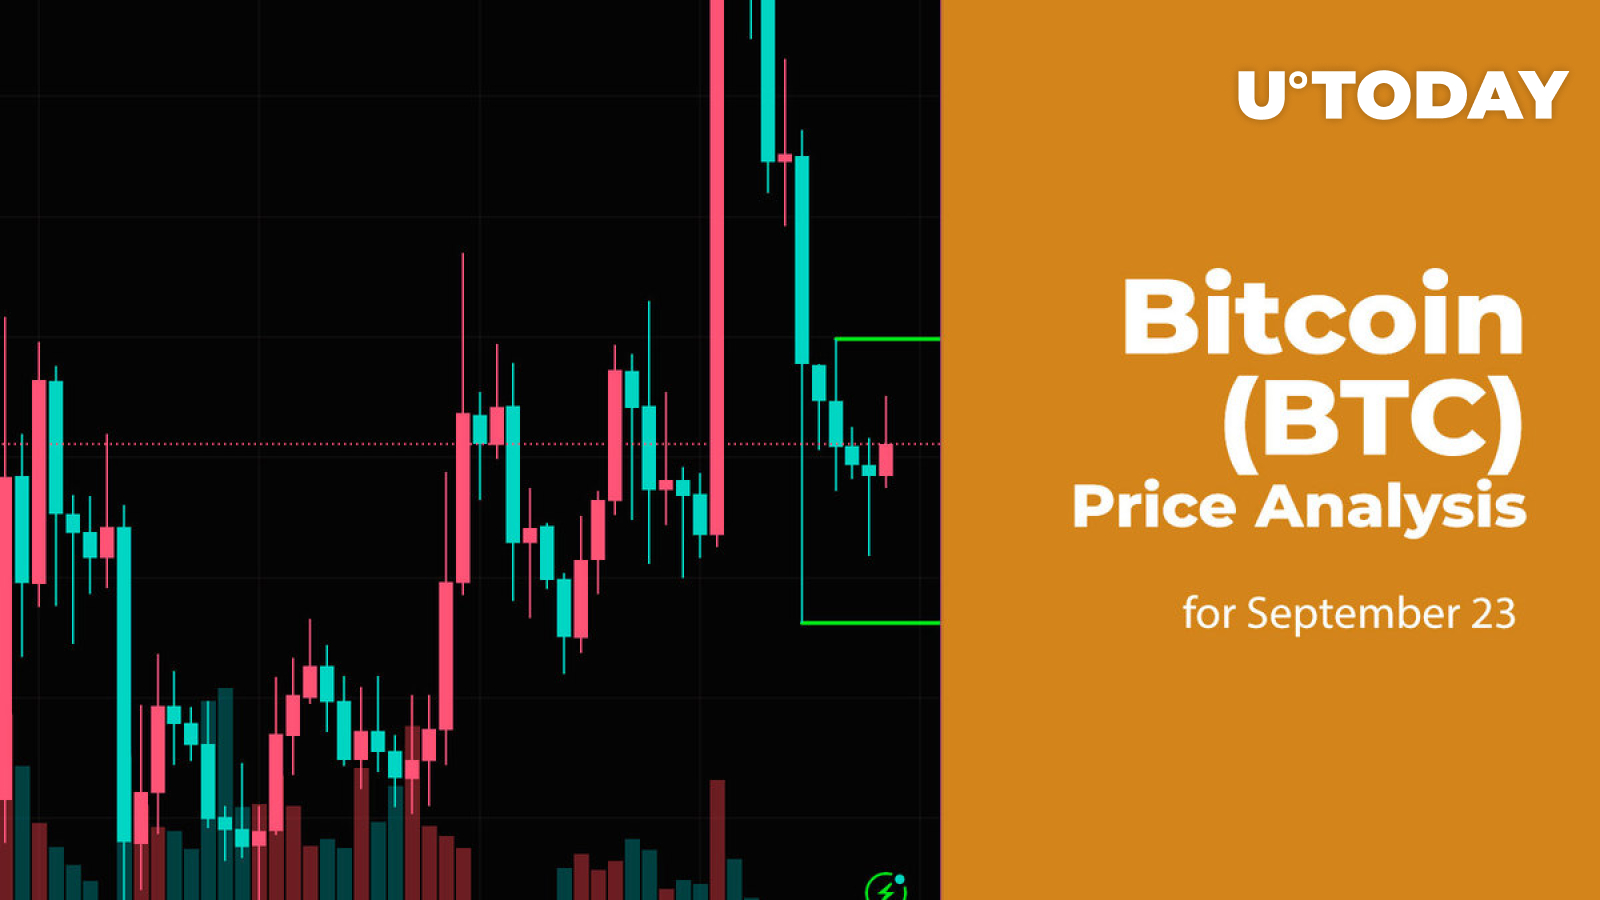 Bitcoin (BTC) Price Analysis for September 23